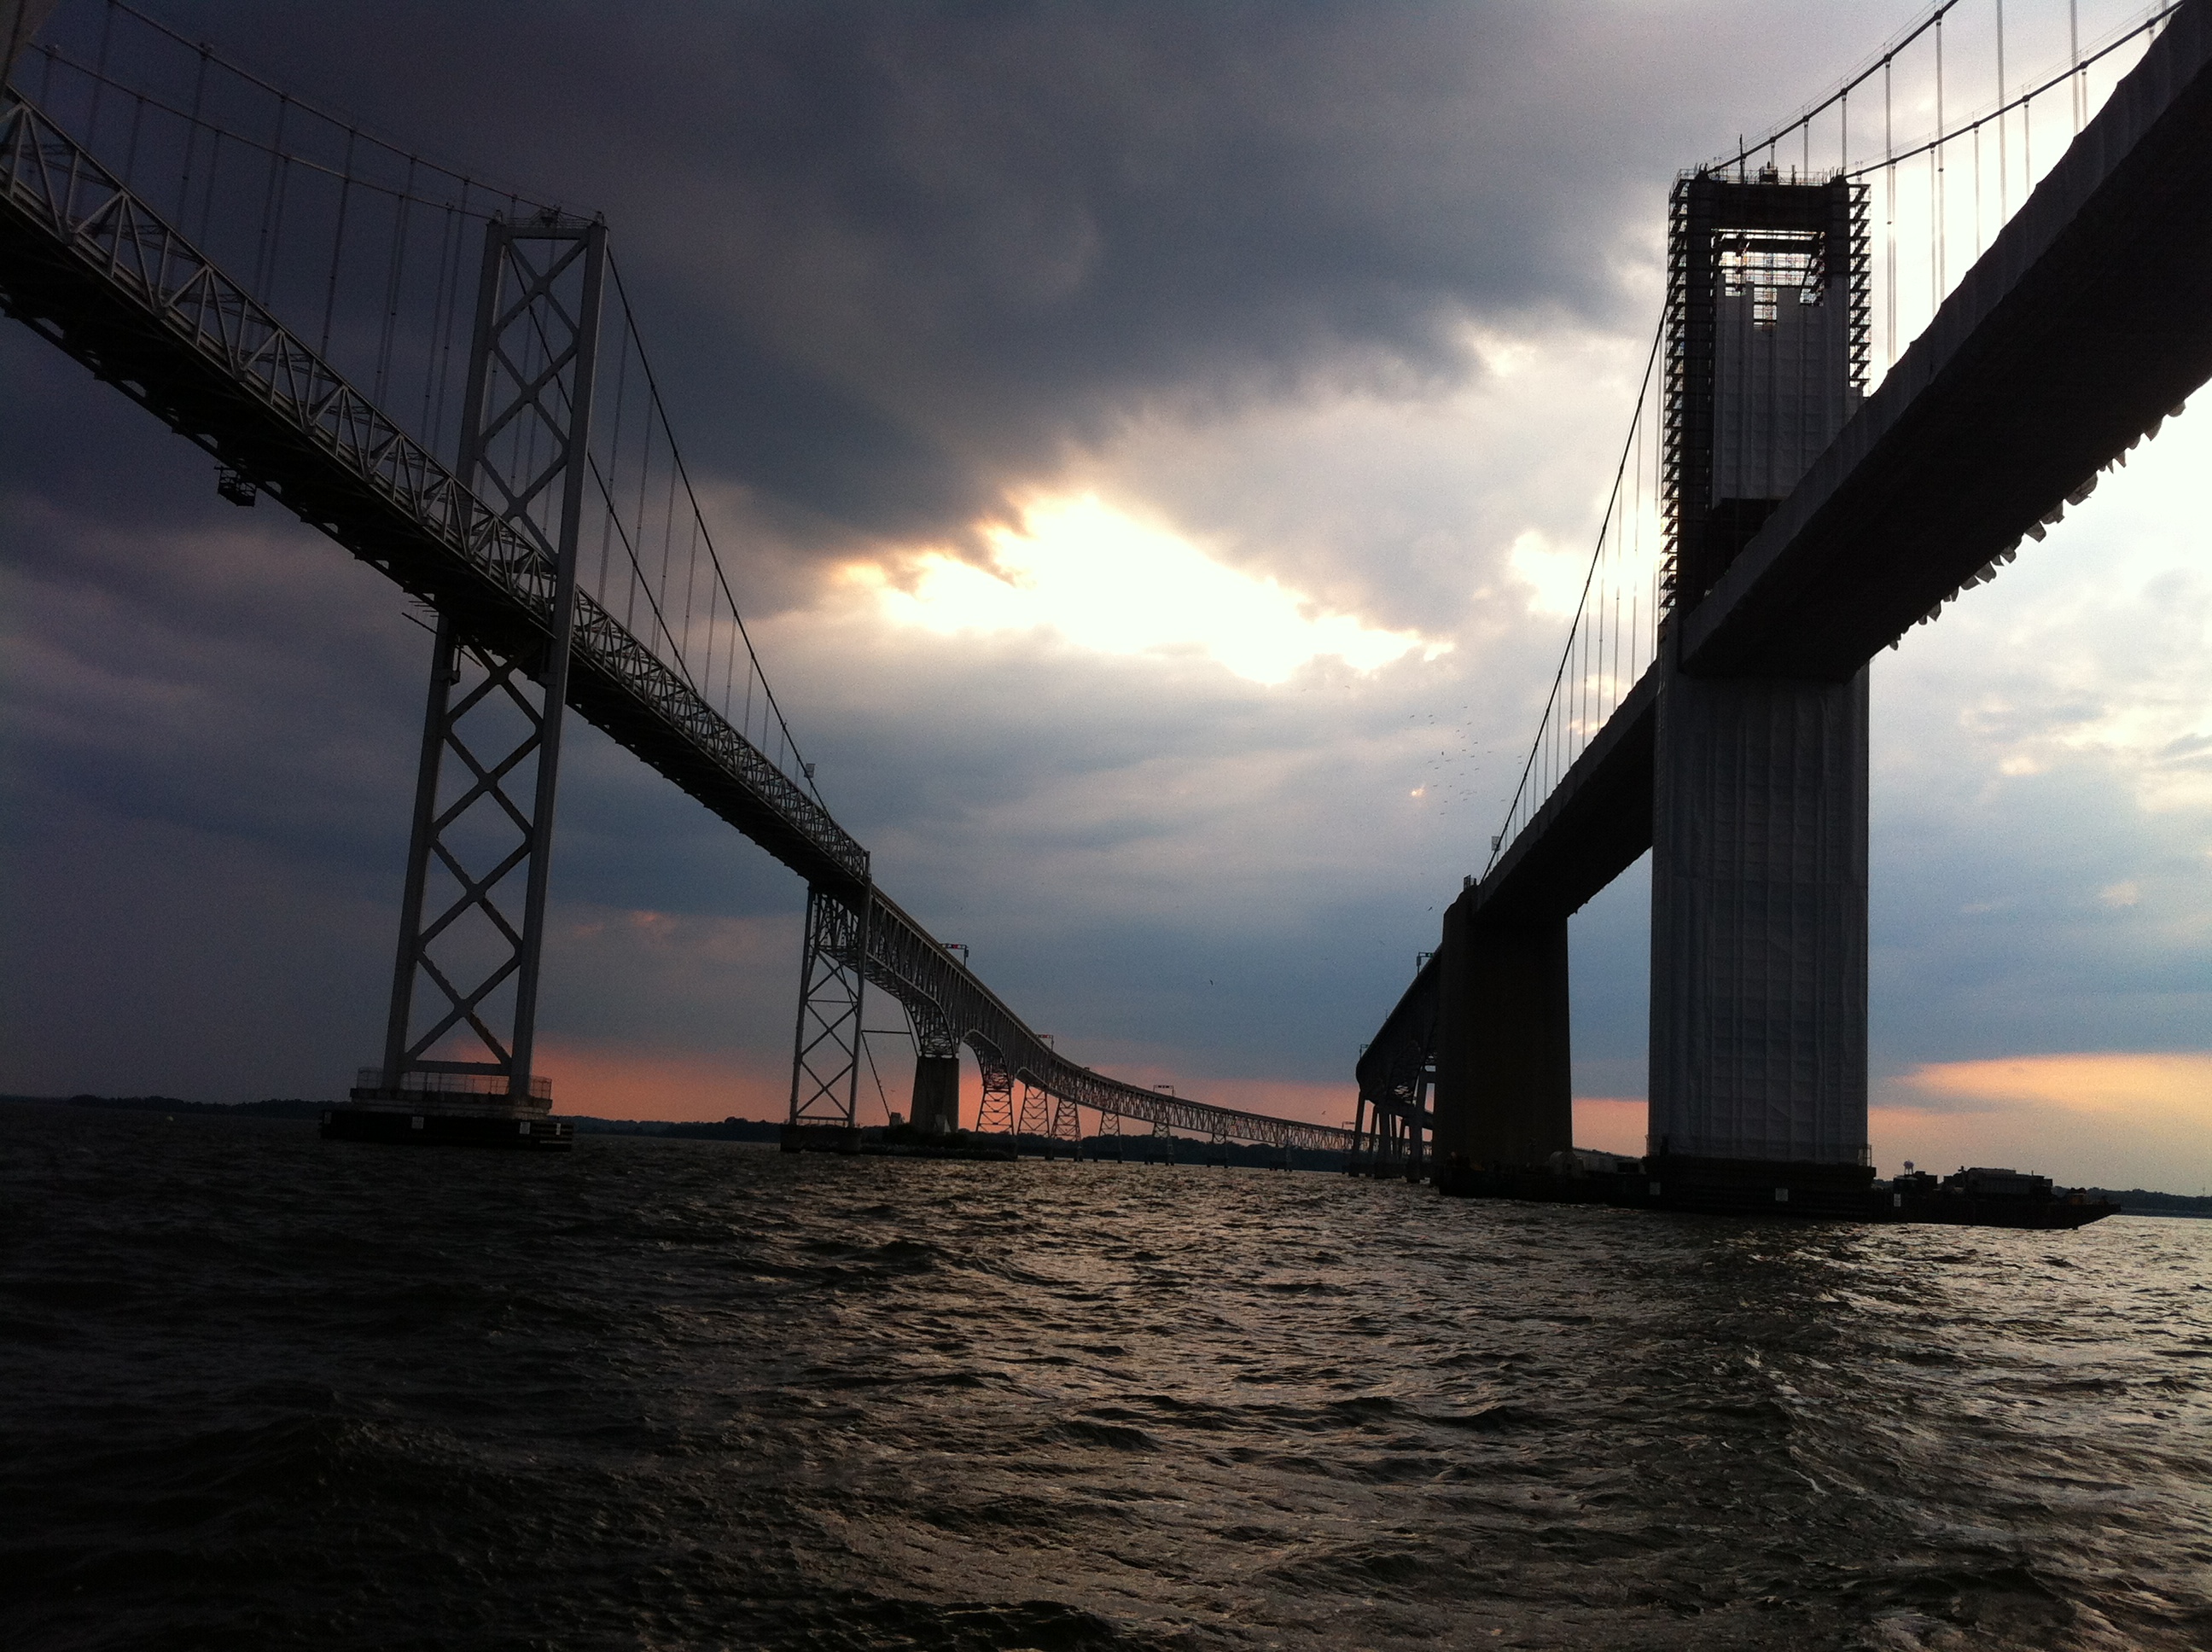 Dark storm over the Bay Bridge spans